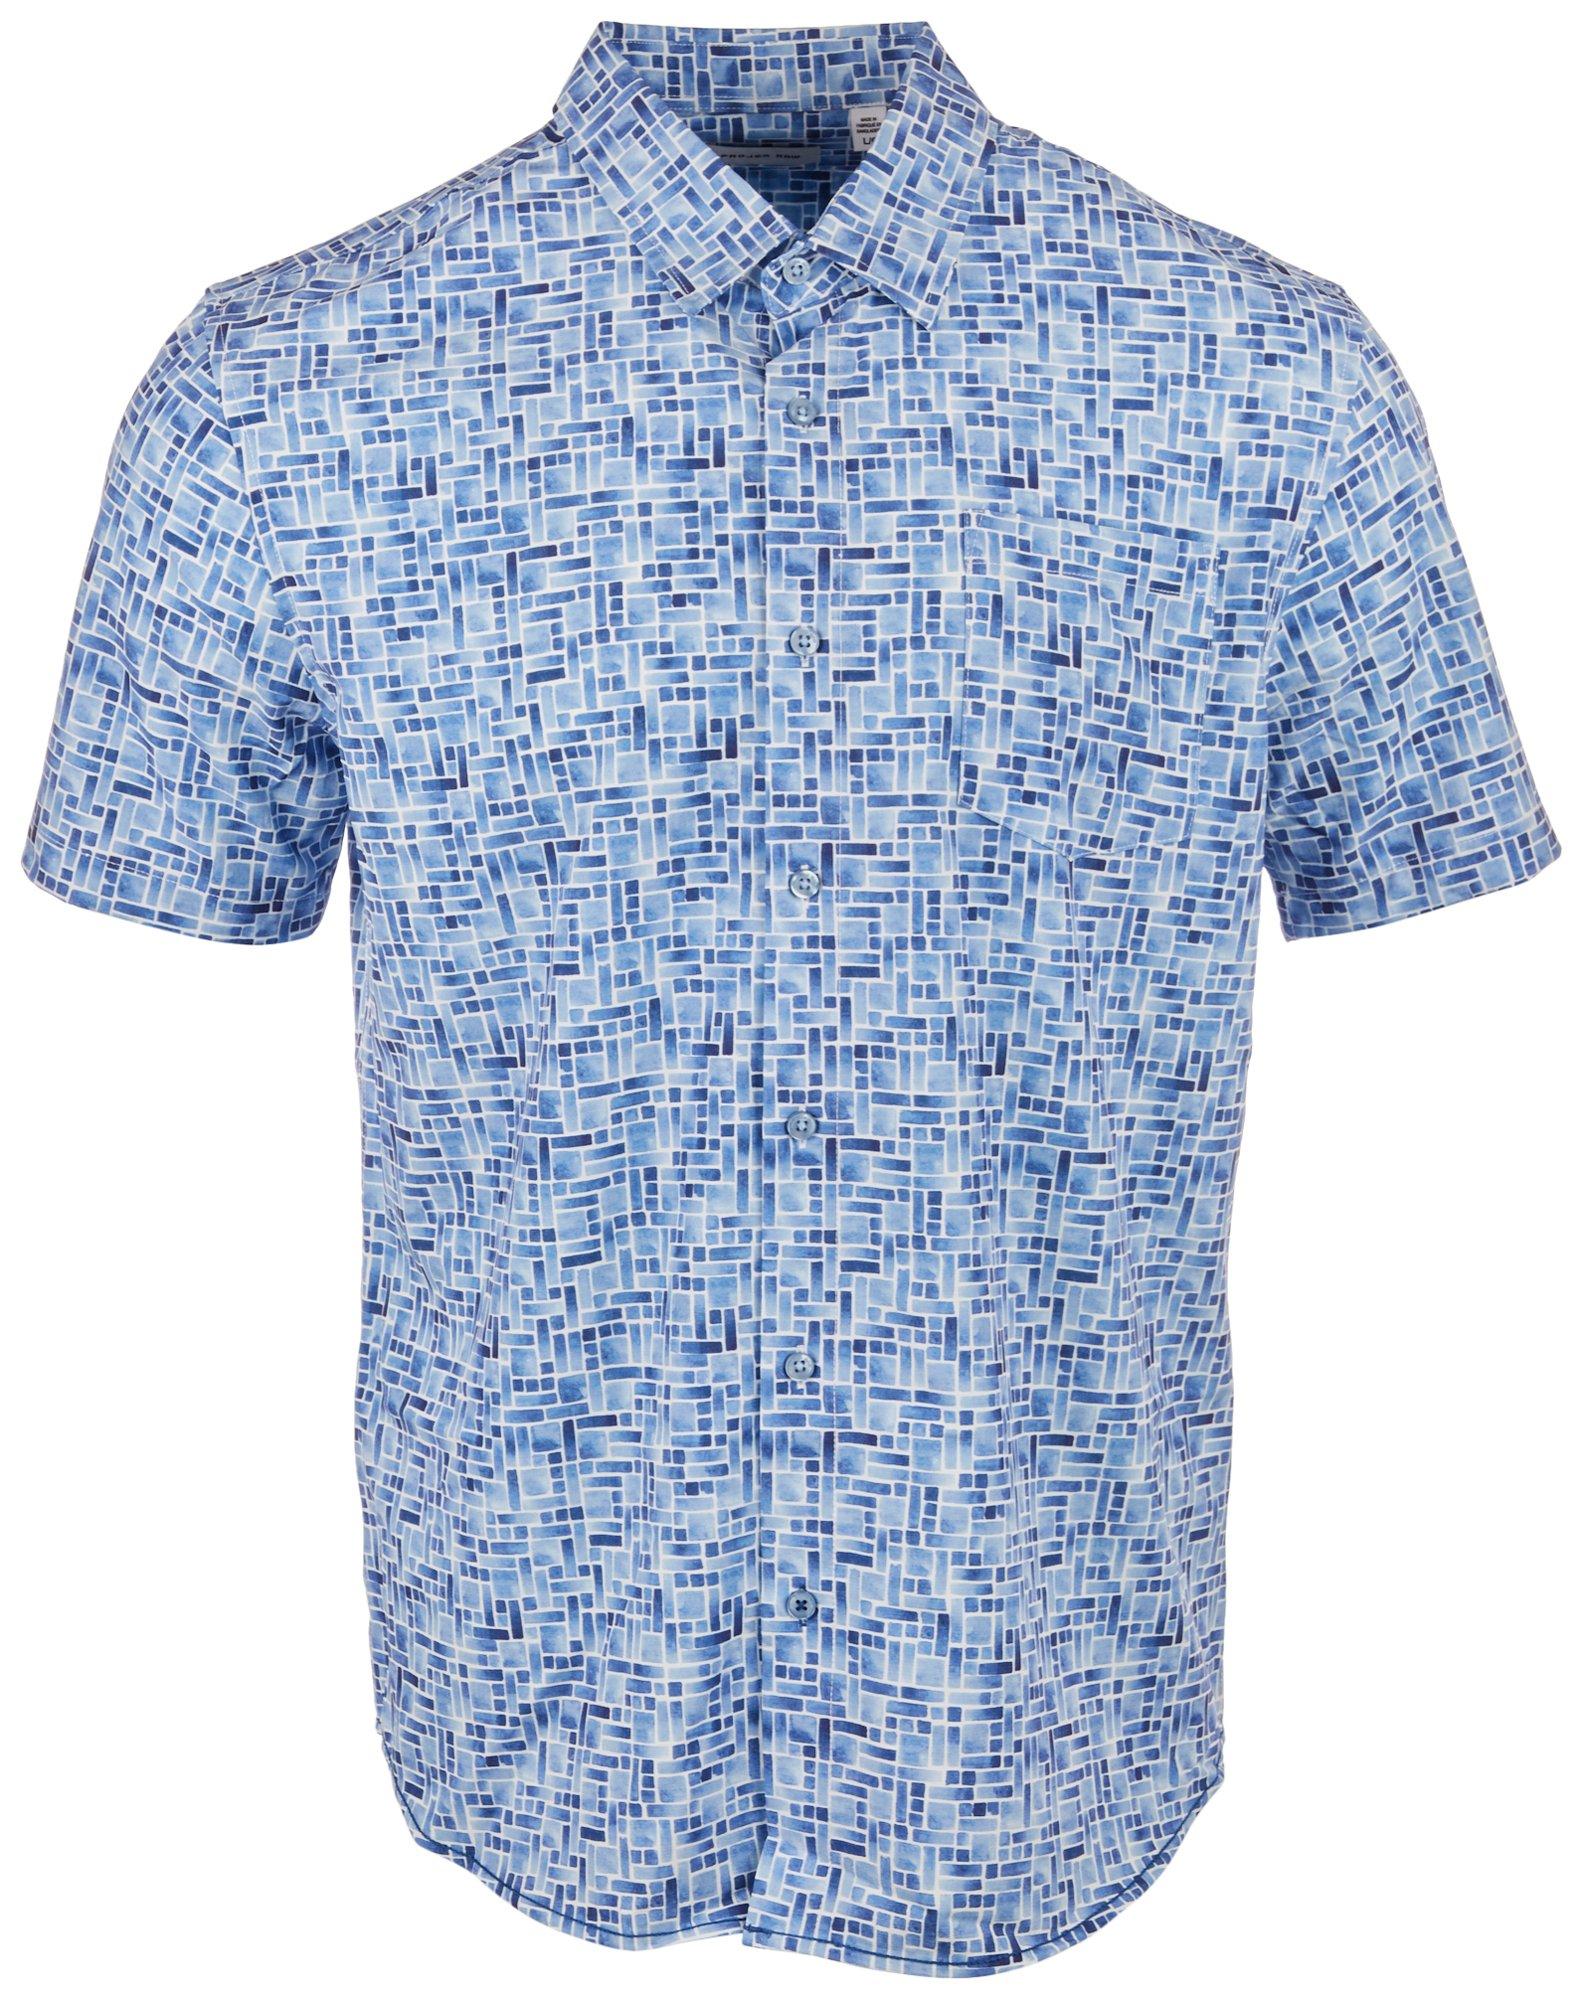 Mens Microport Abstract Short Sleeve Shirt